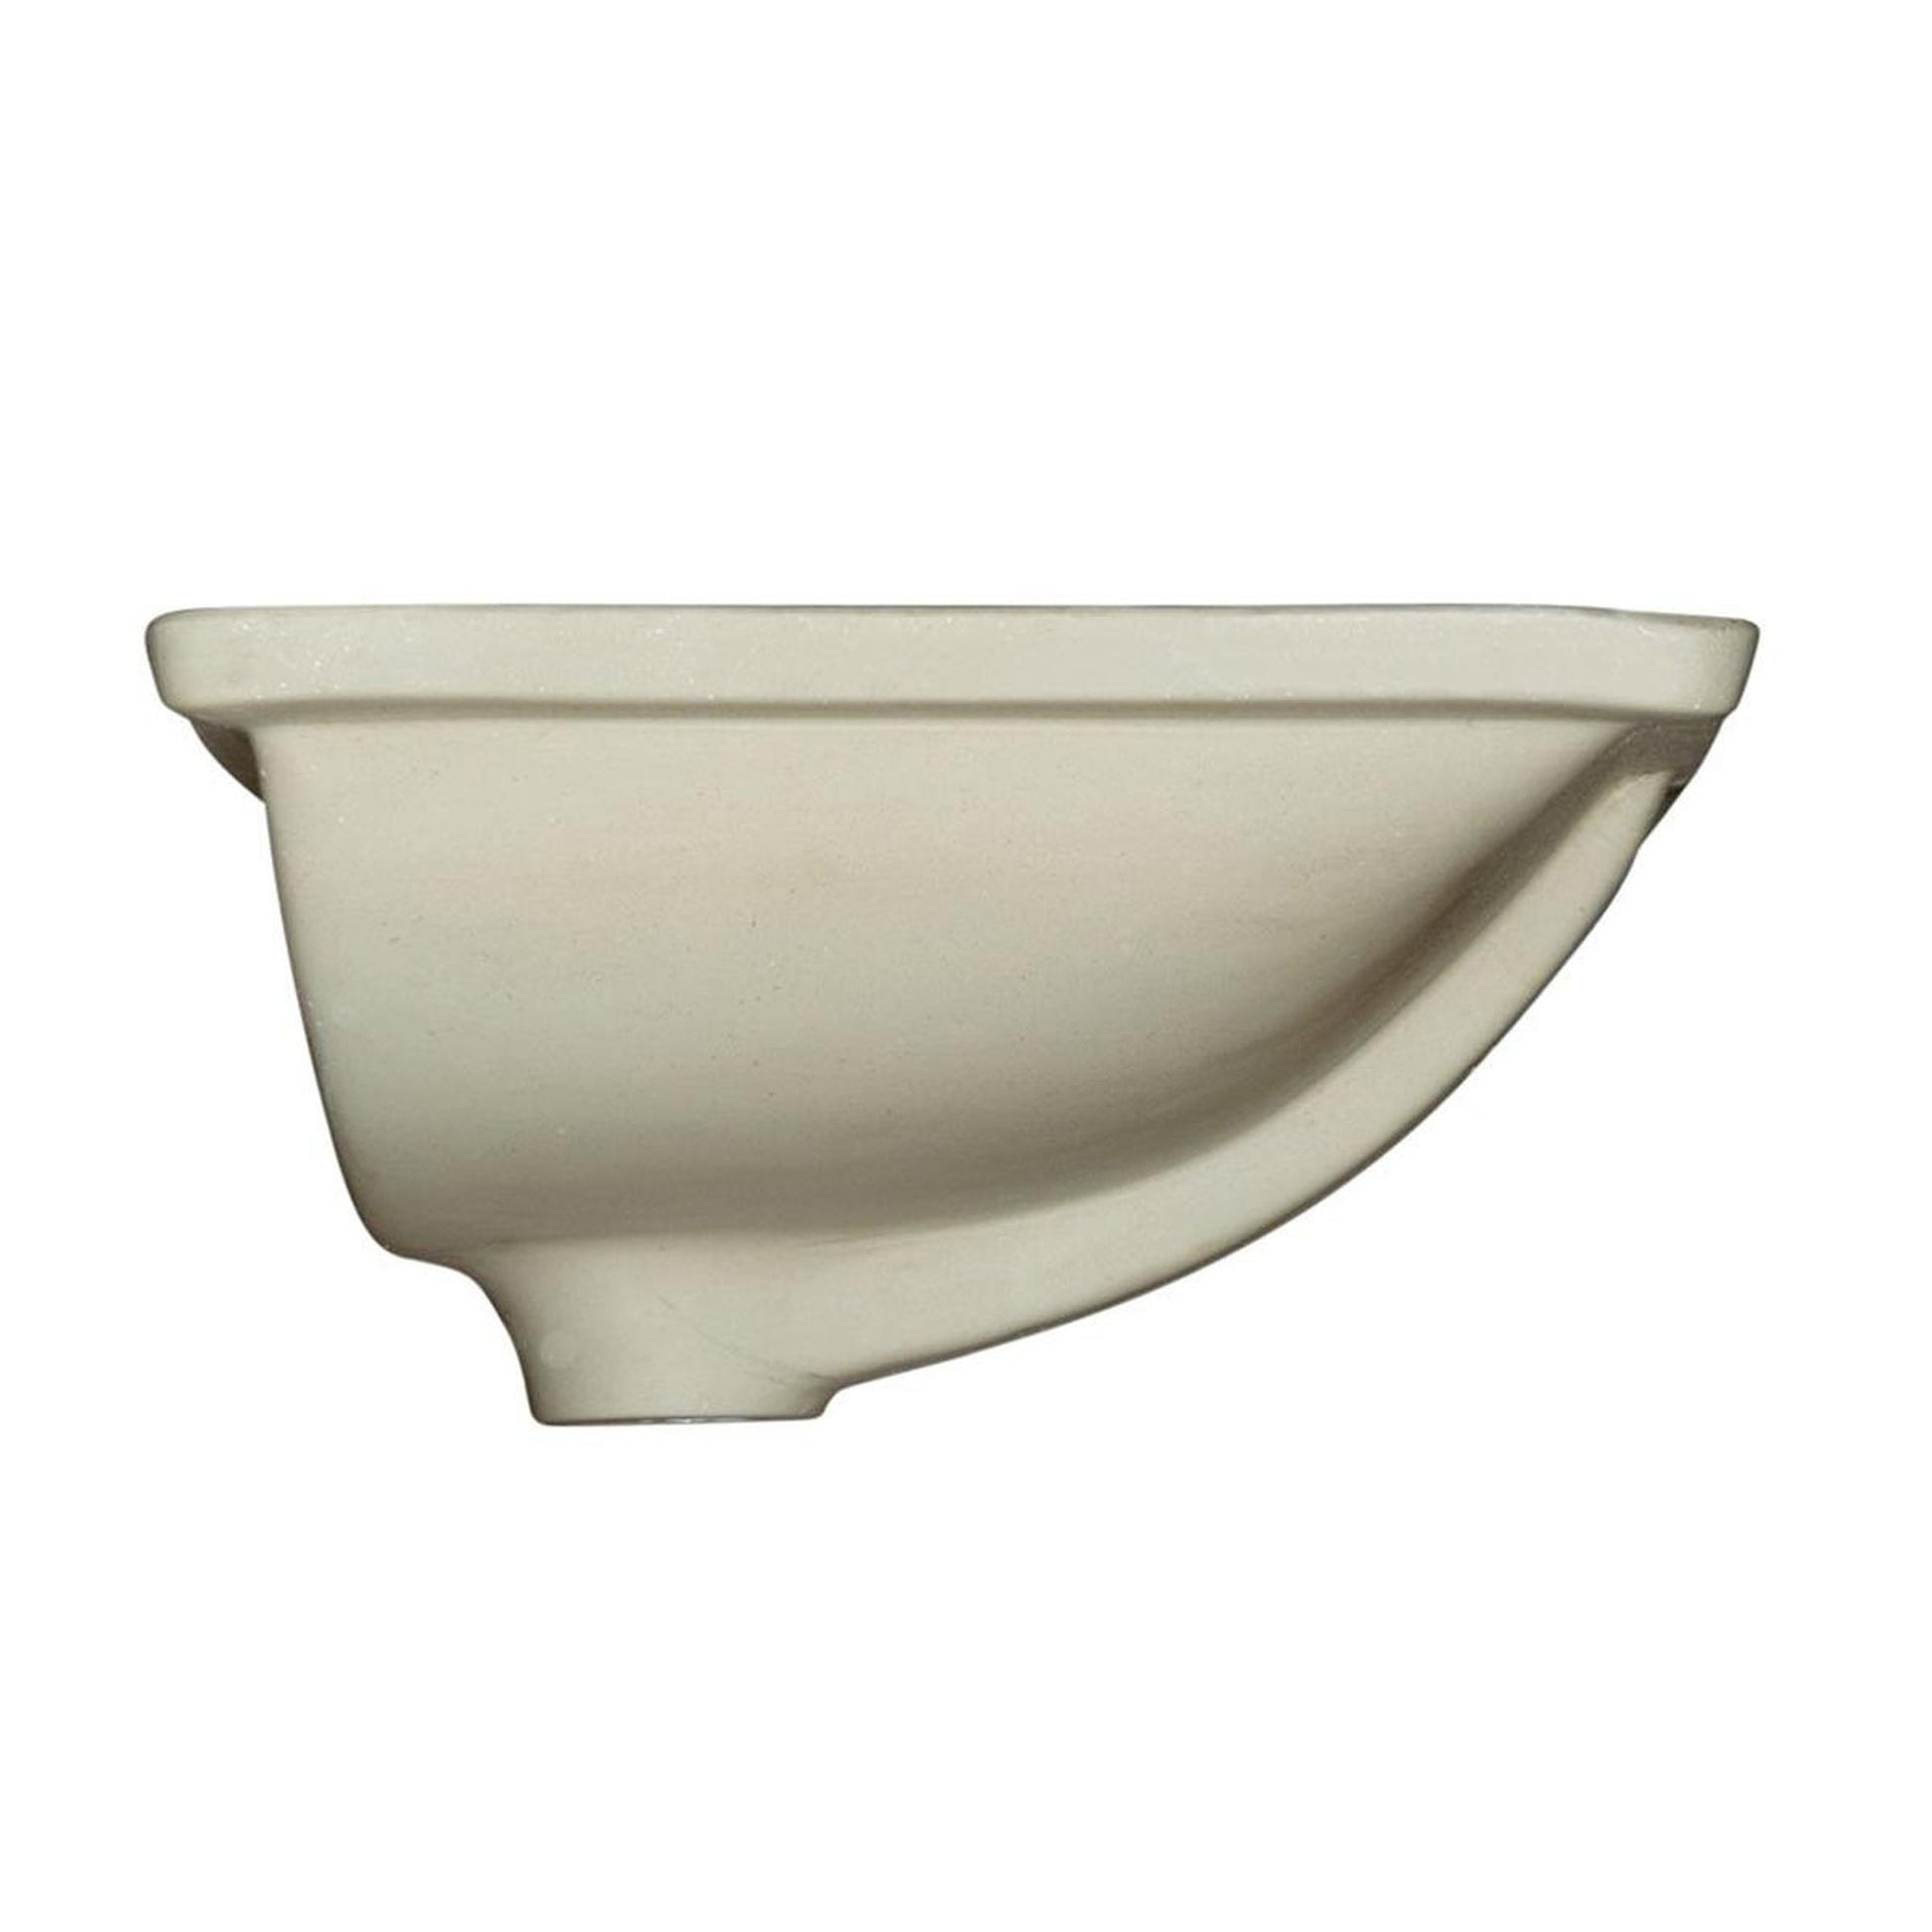 Pelican Int'l Pearl Series PL-3099 18" x 13" White Porcelain Undermount Bathroom Sink